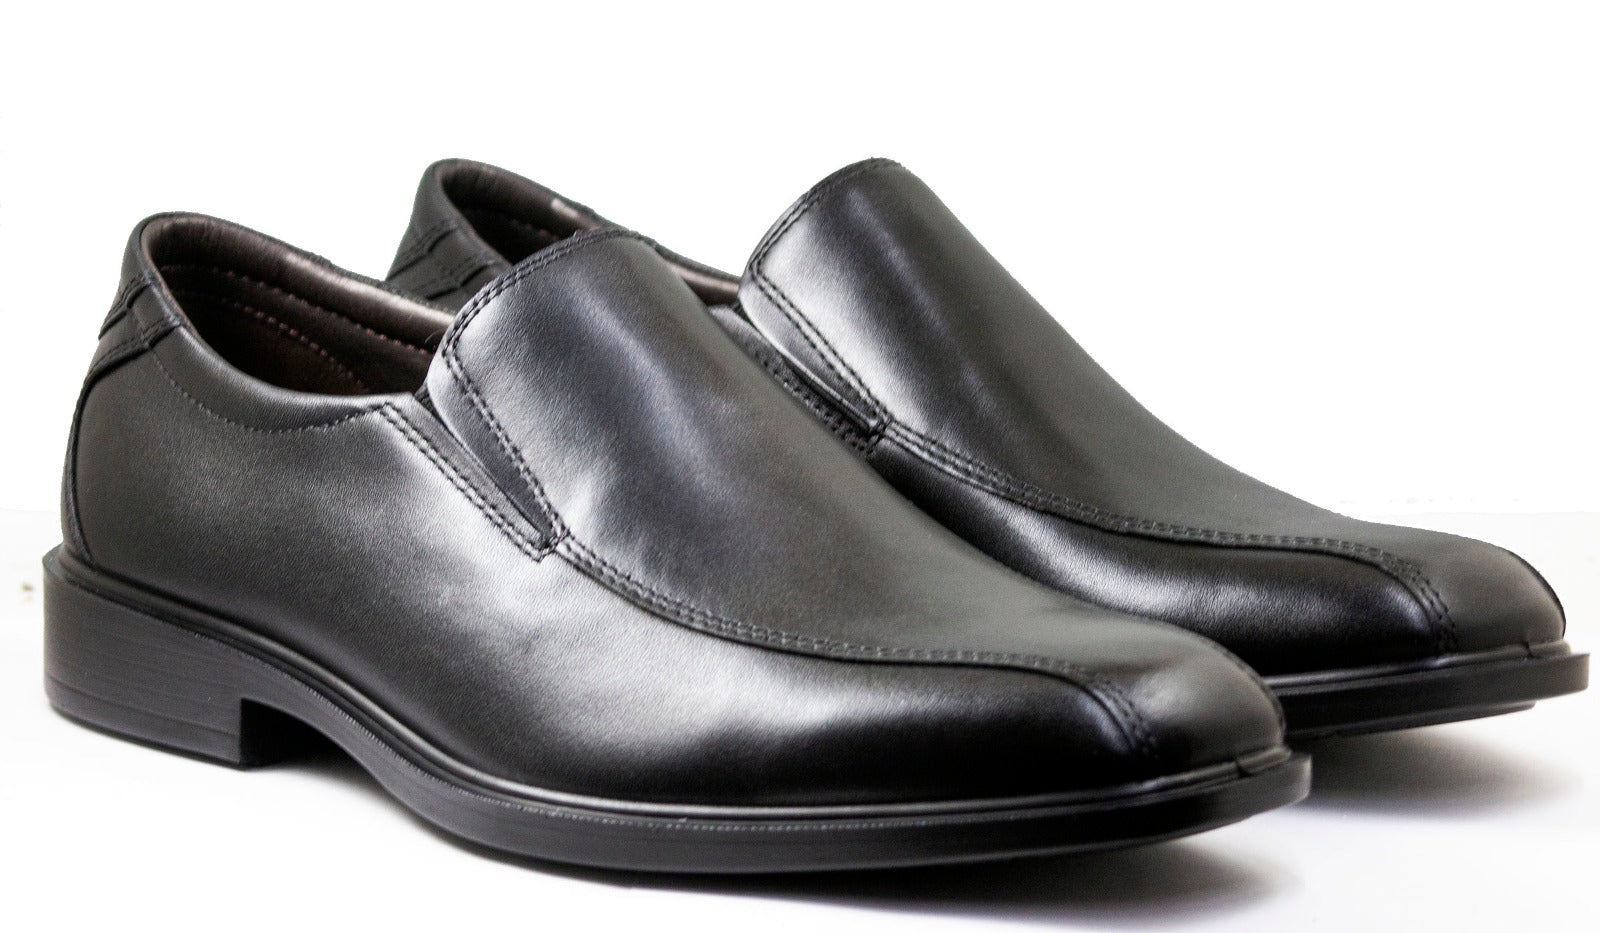 Sir Imperial Men's Black Dress Rubber Shoes 31011